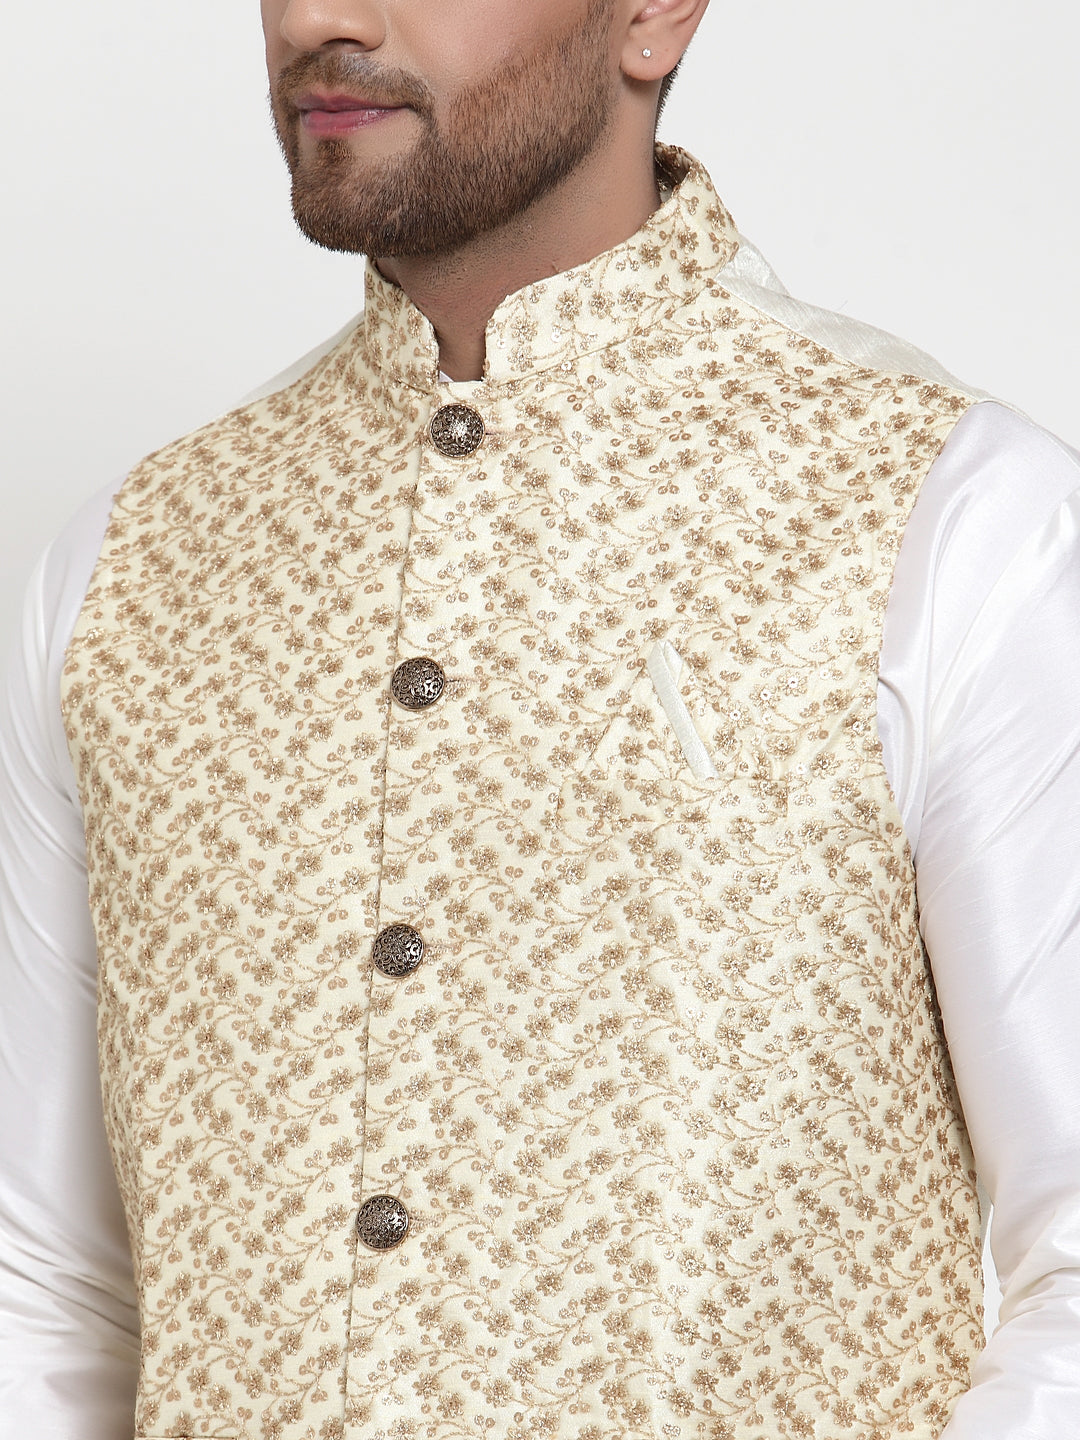 Jompers Men's Solid Dupion Kurta Pajama with Embroidered Nehru Jacket